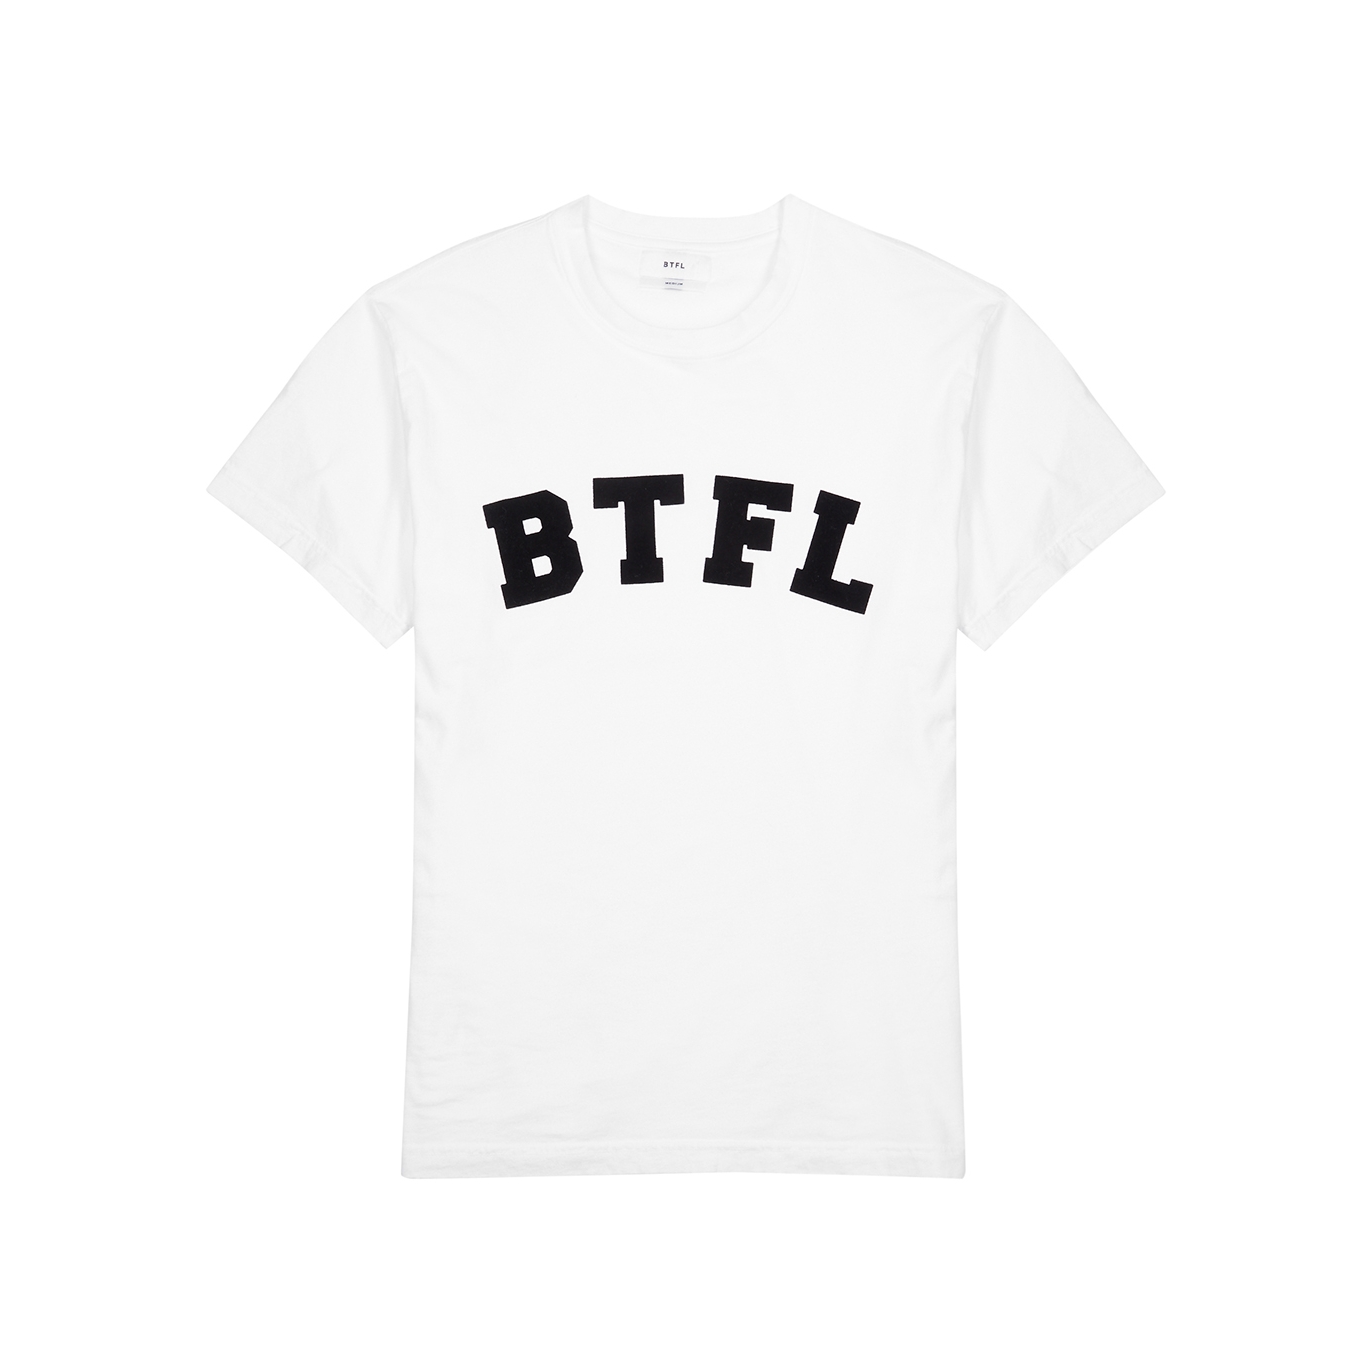 Btfl Logo Cotton T-shirt - White - L